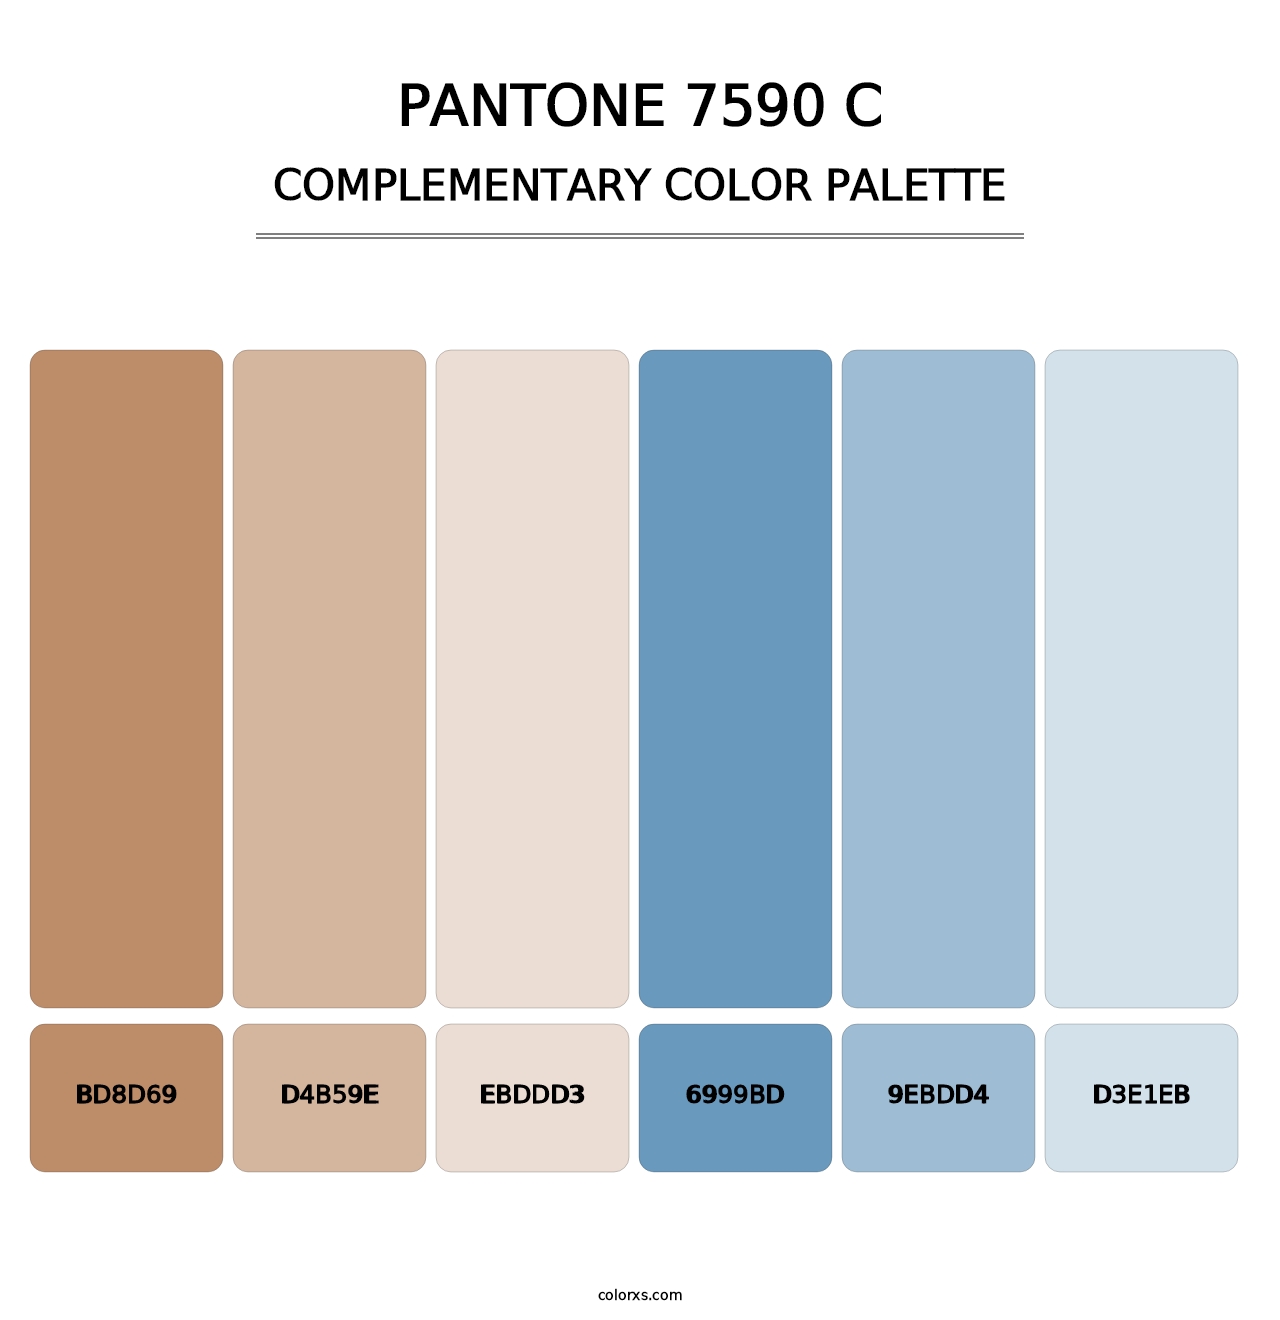 PANTONE 7590 C - Complementary Color Palette